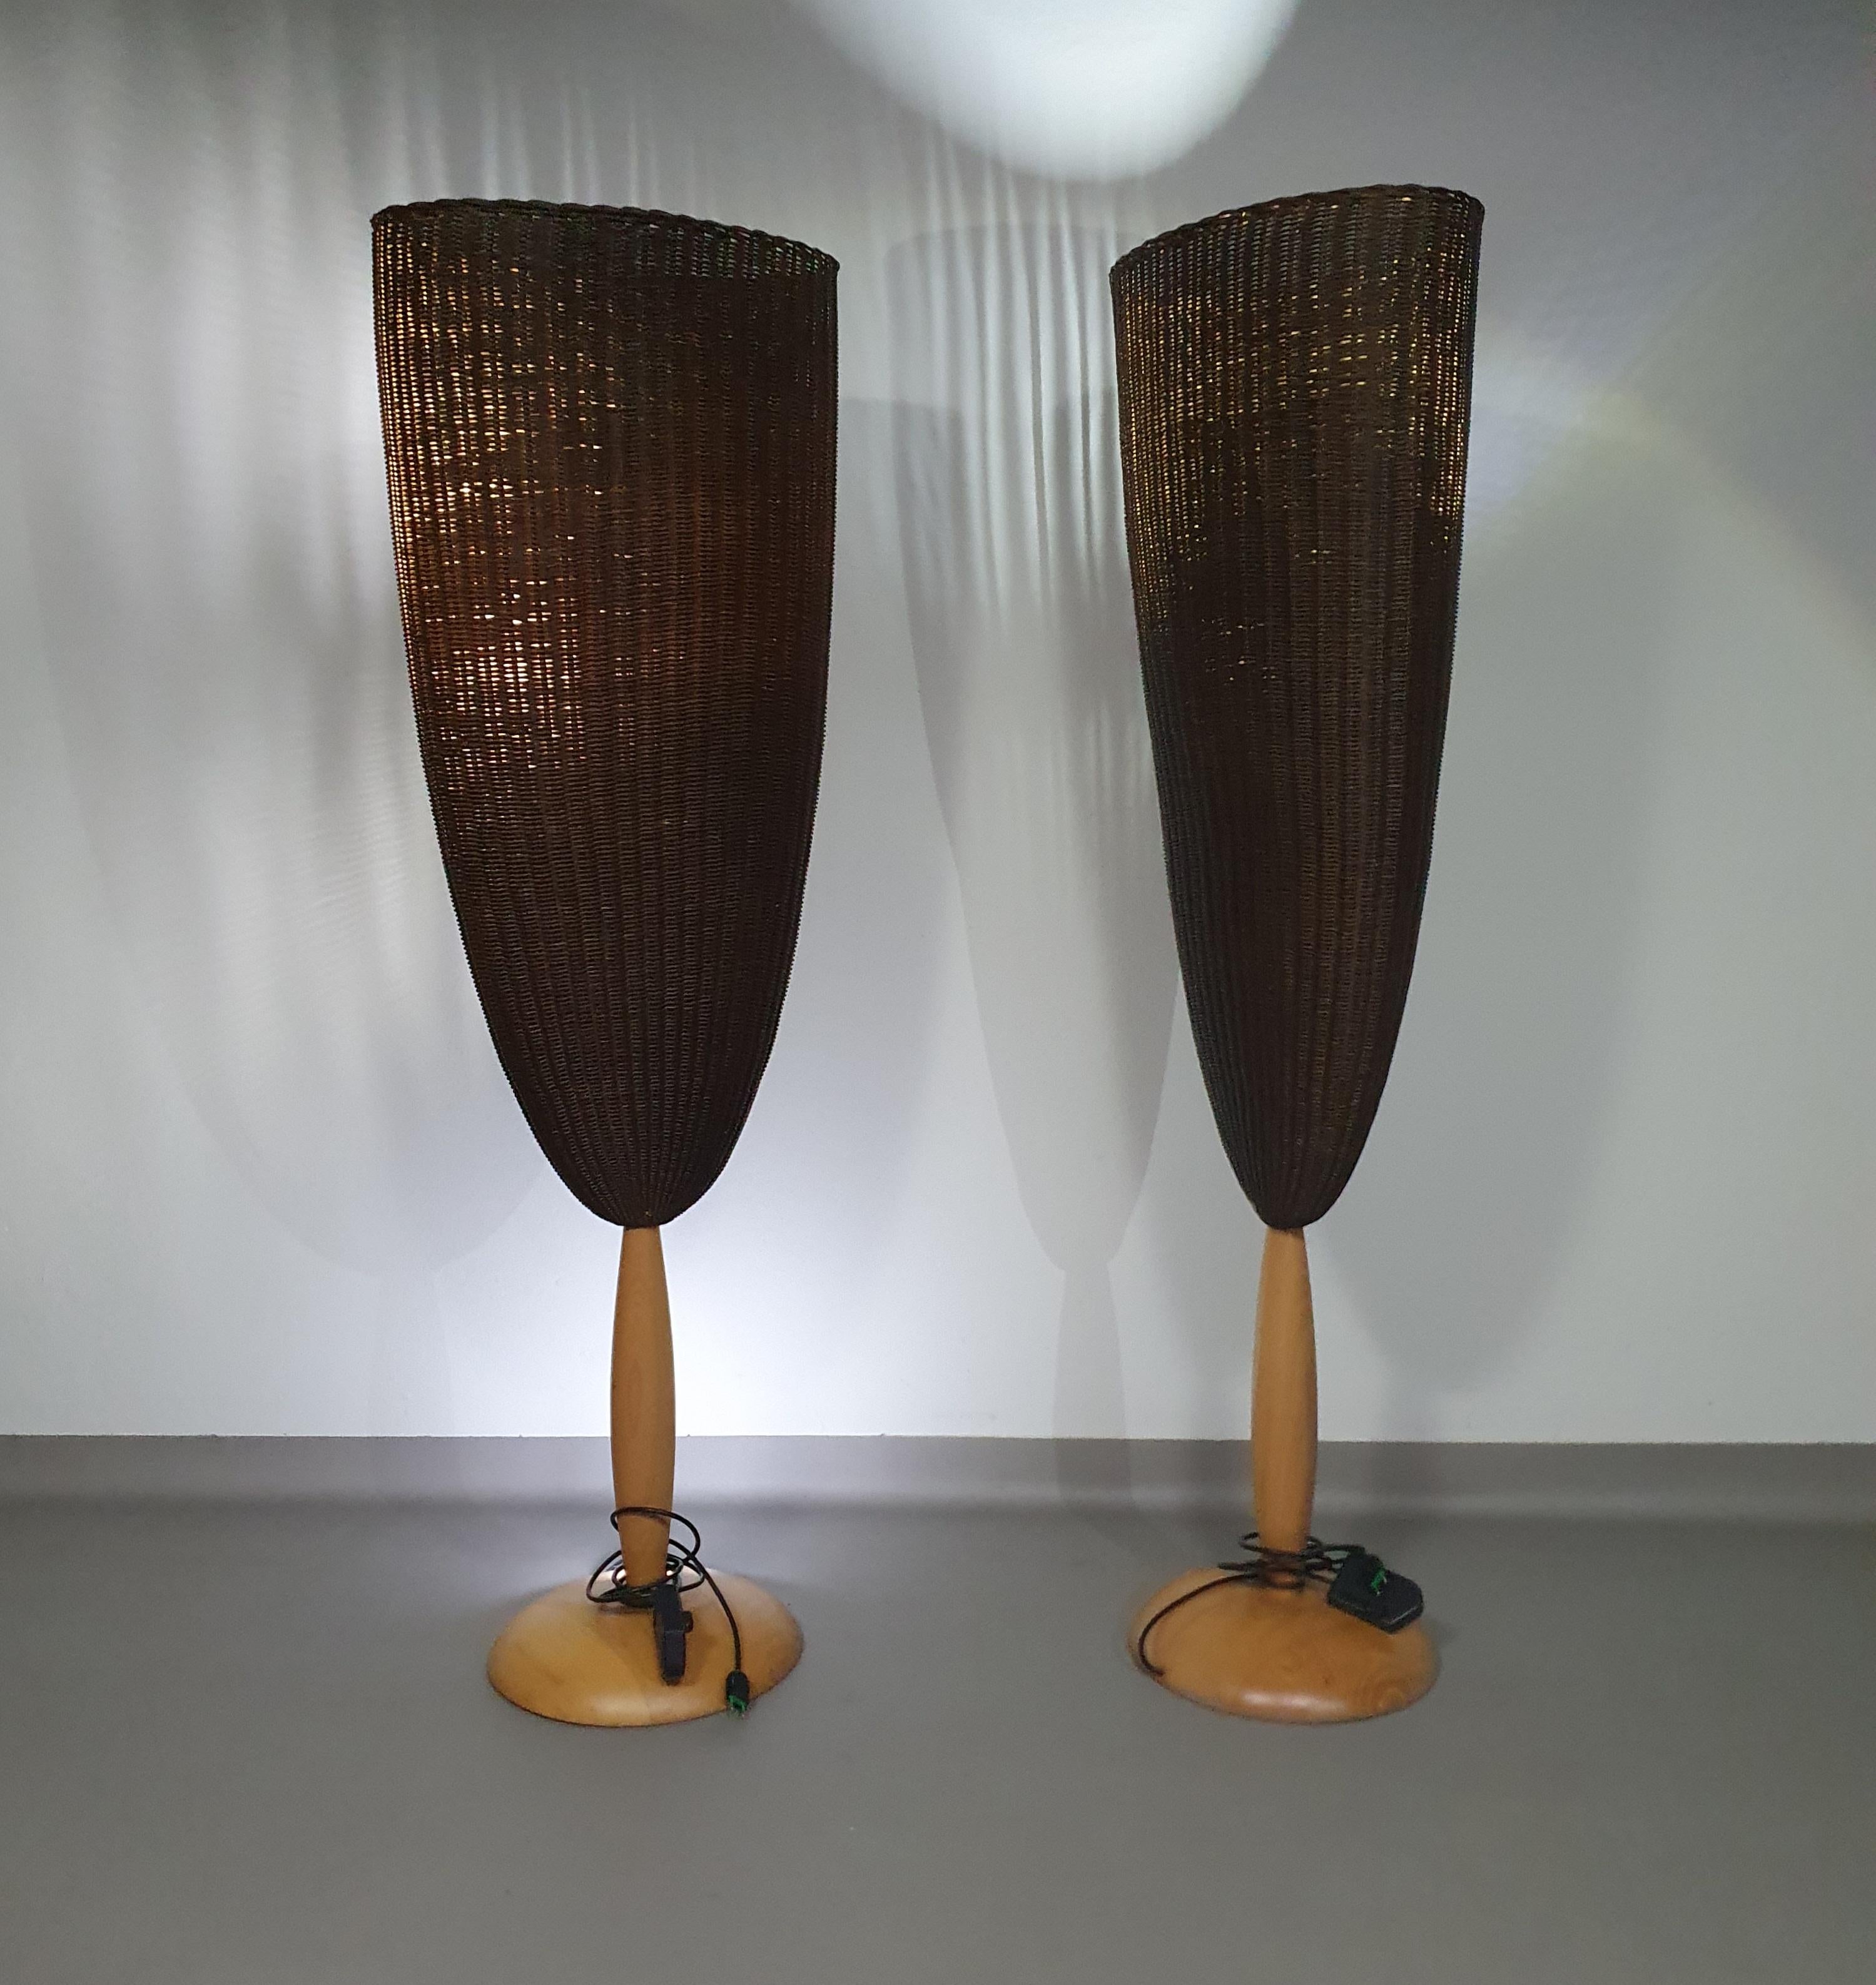 2 x Marco Agnoli for Pierantonio Bonacina XL / Flûte Floor Lamp in Cane and Wood For Sale 1